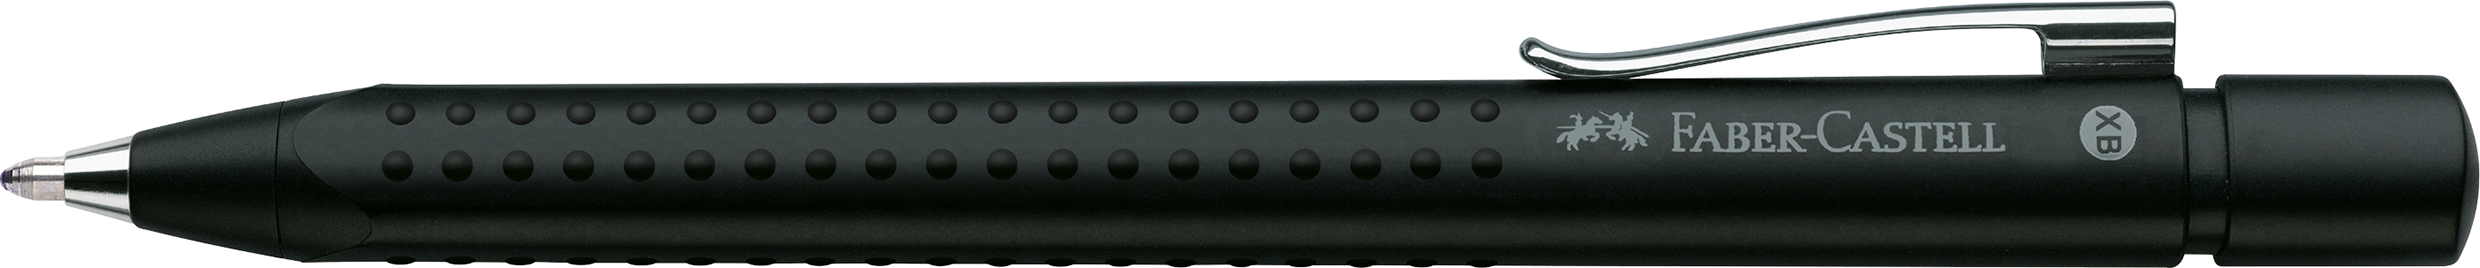 FABER-CASTELL Stylo à bille GRIP 2011 M 144187 noir mat 0.7mm